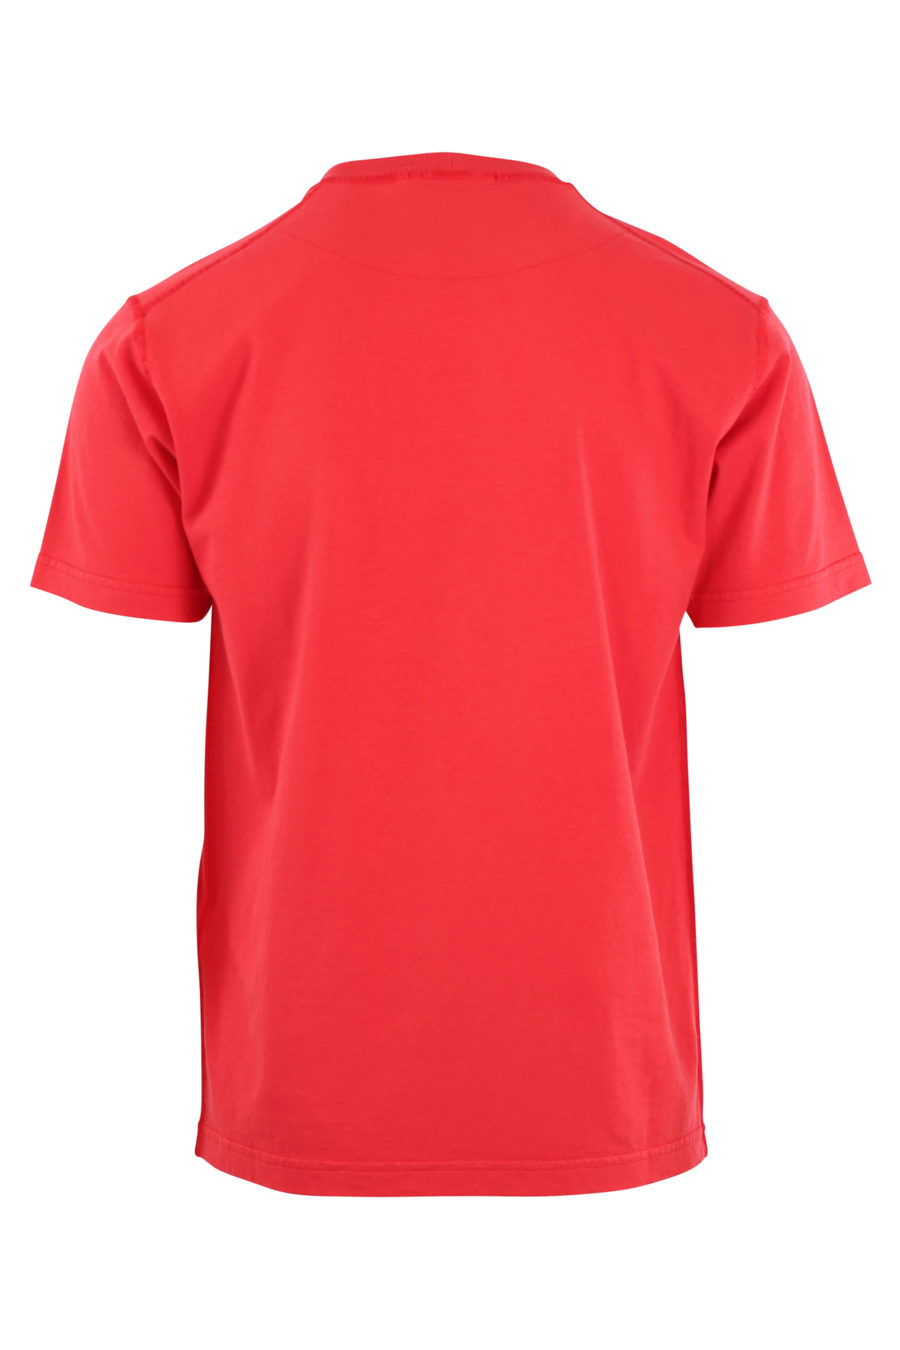 Camiseta roja con logo parche - IMG 9693